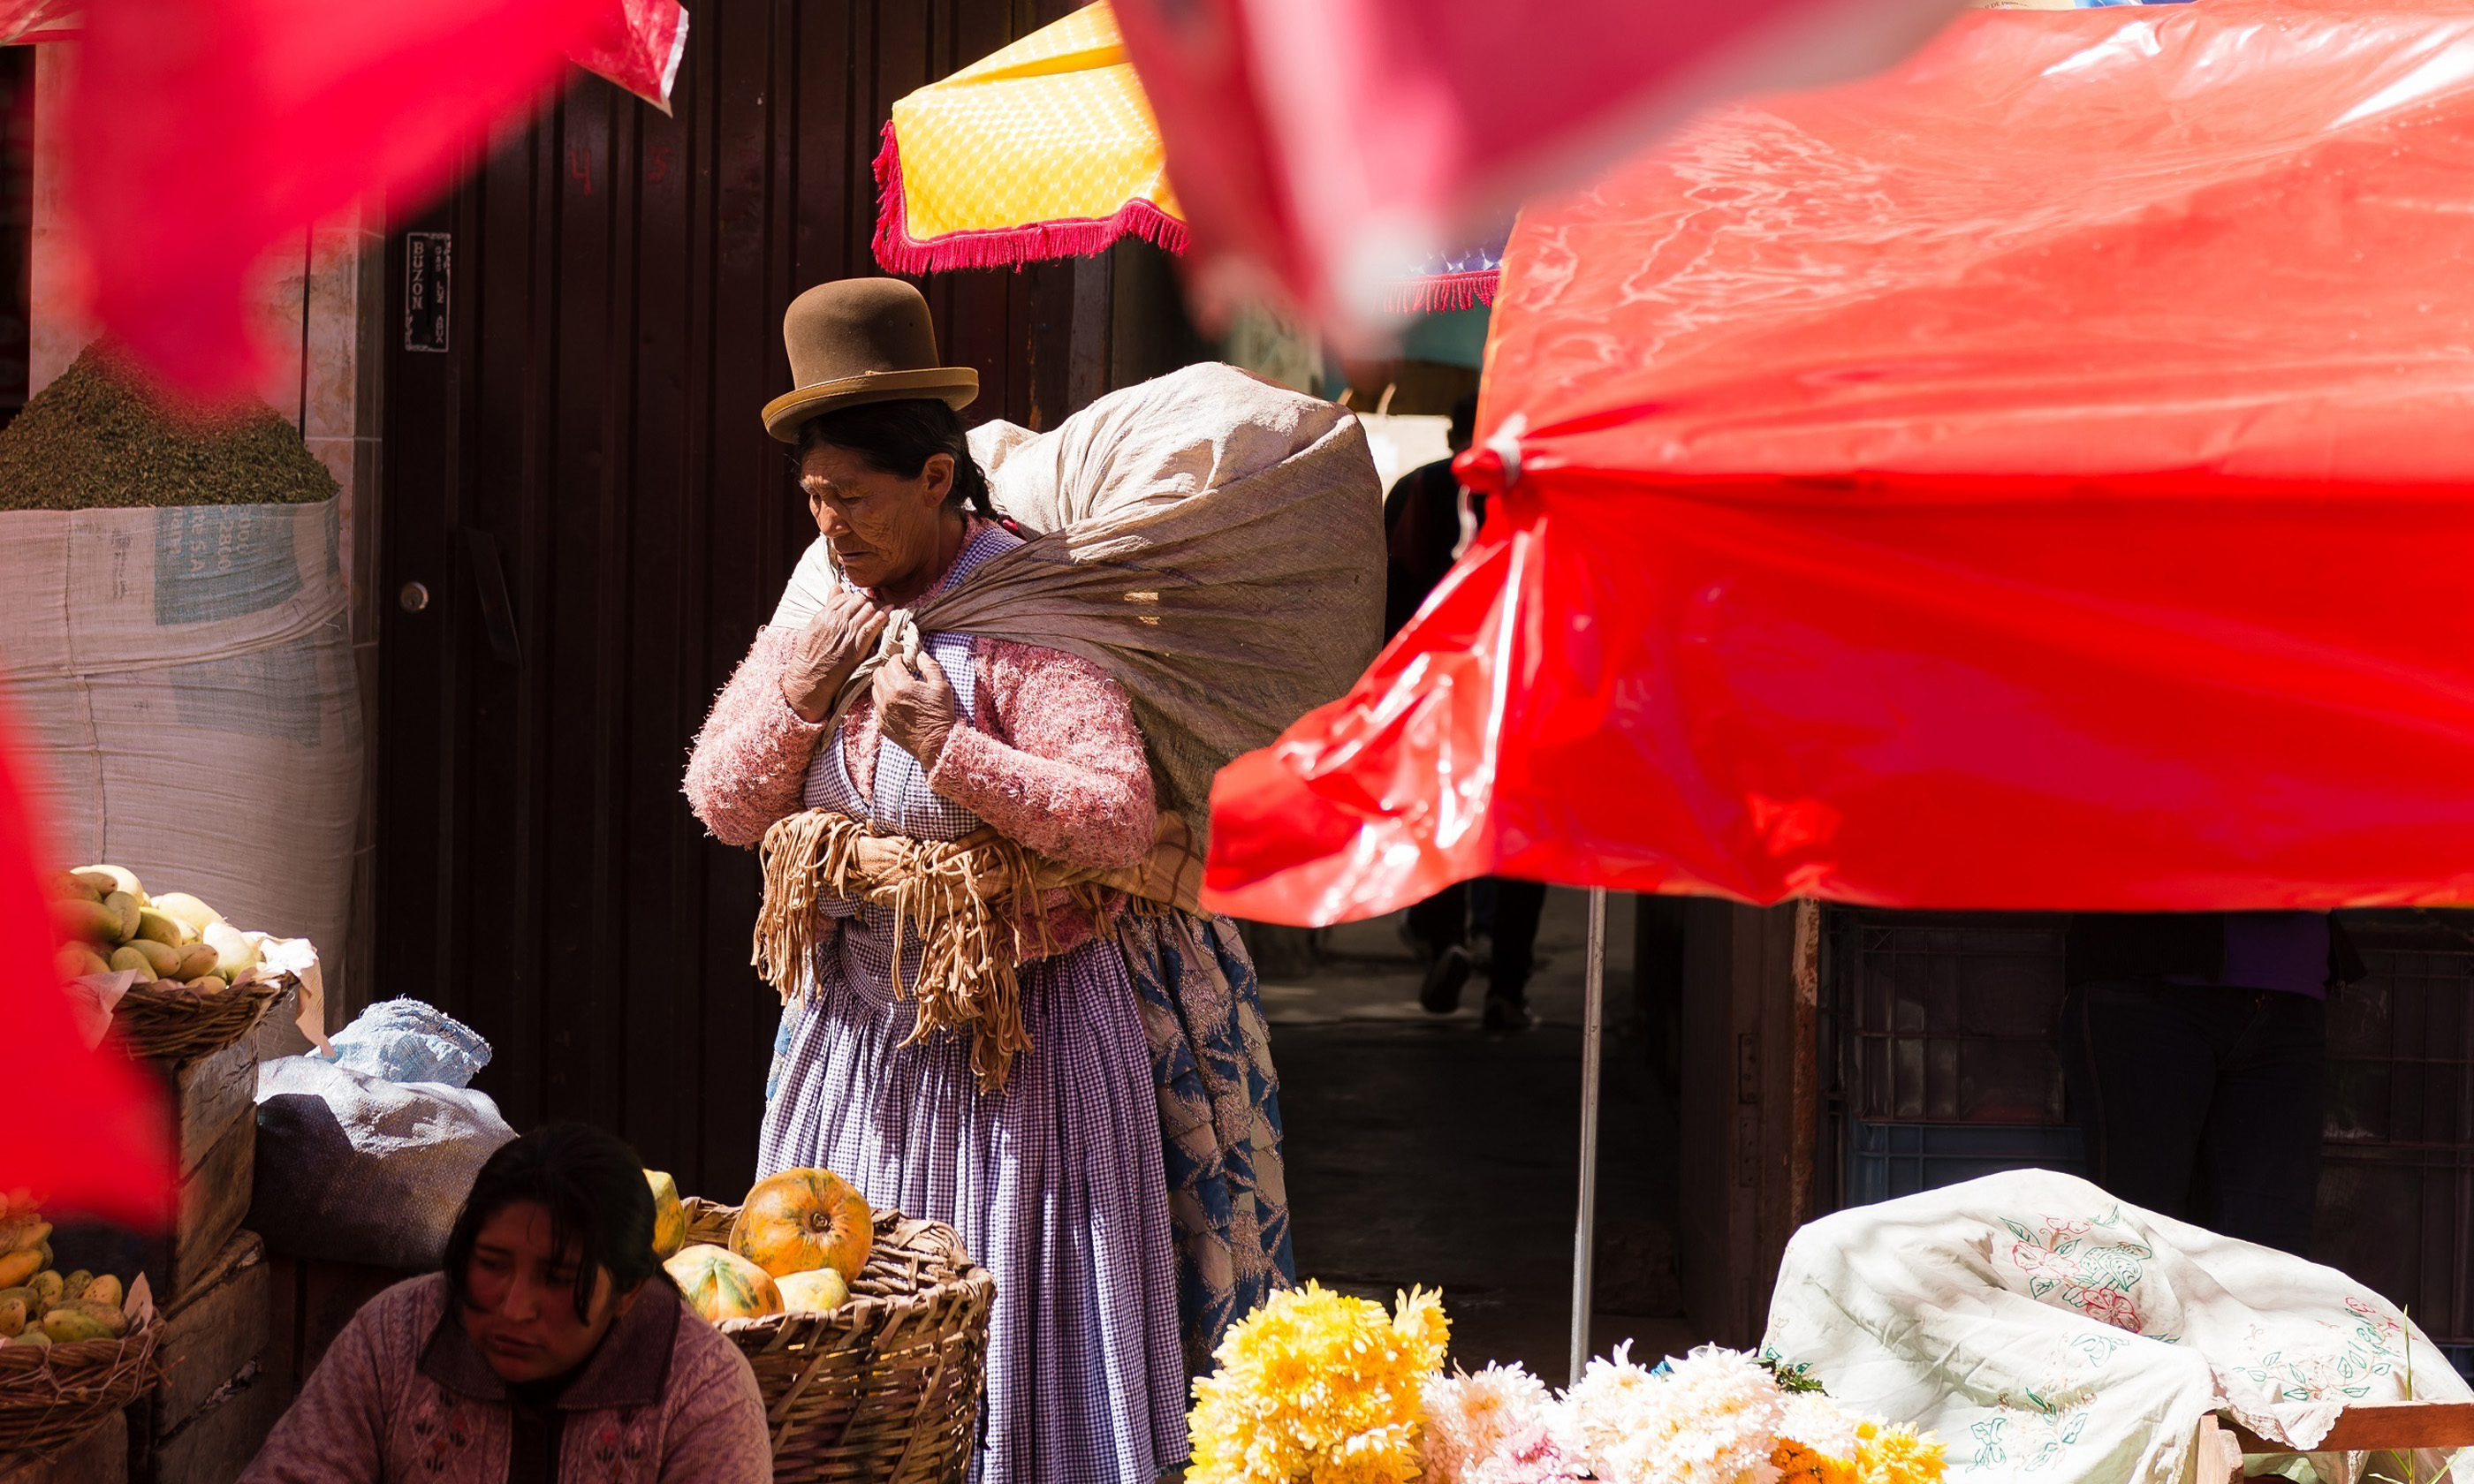 Local lady wandering through market, La Paz (Shutterstock.com)